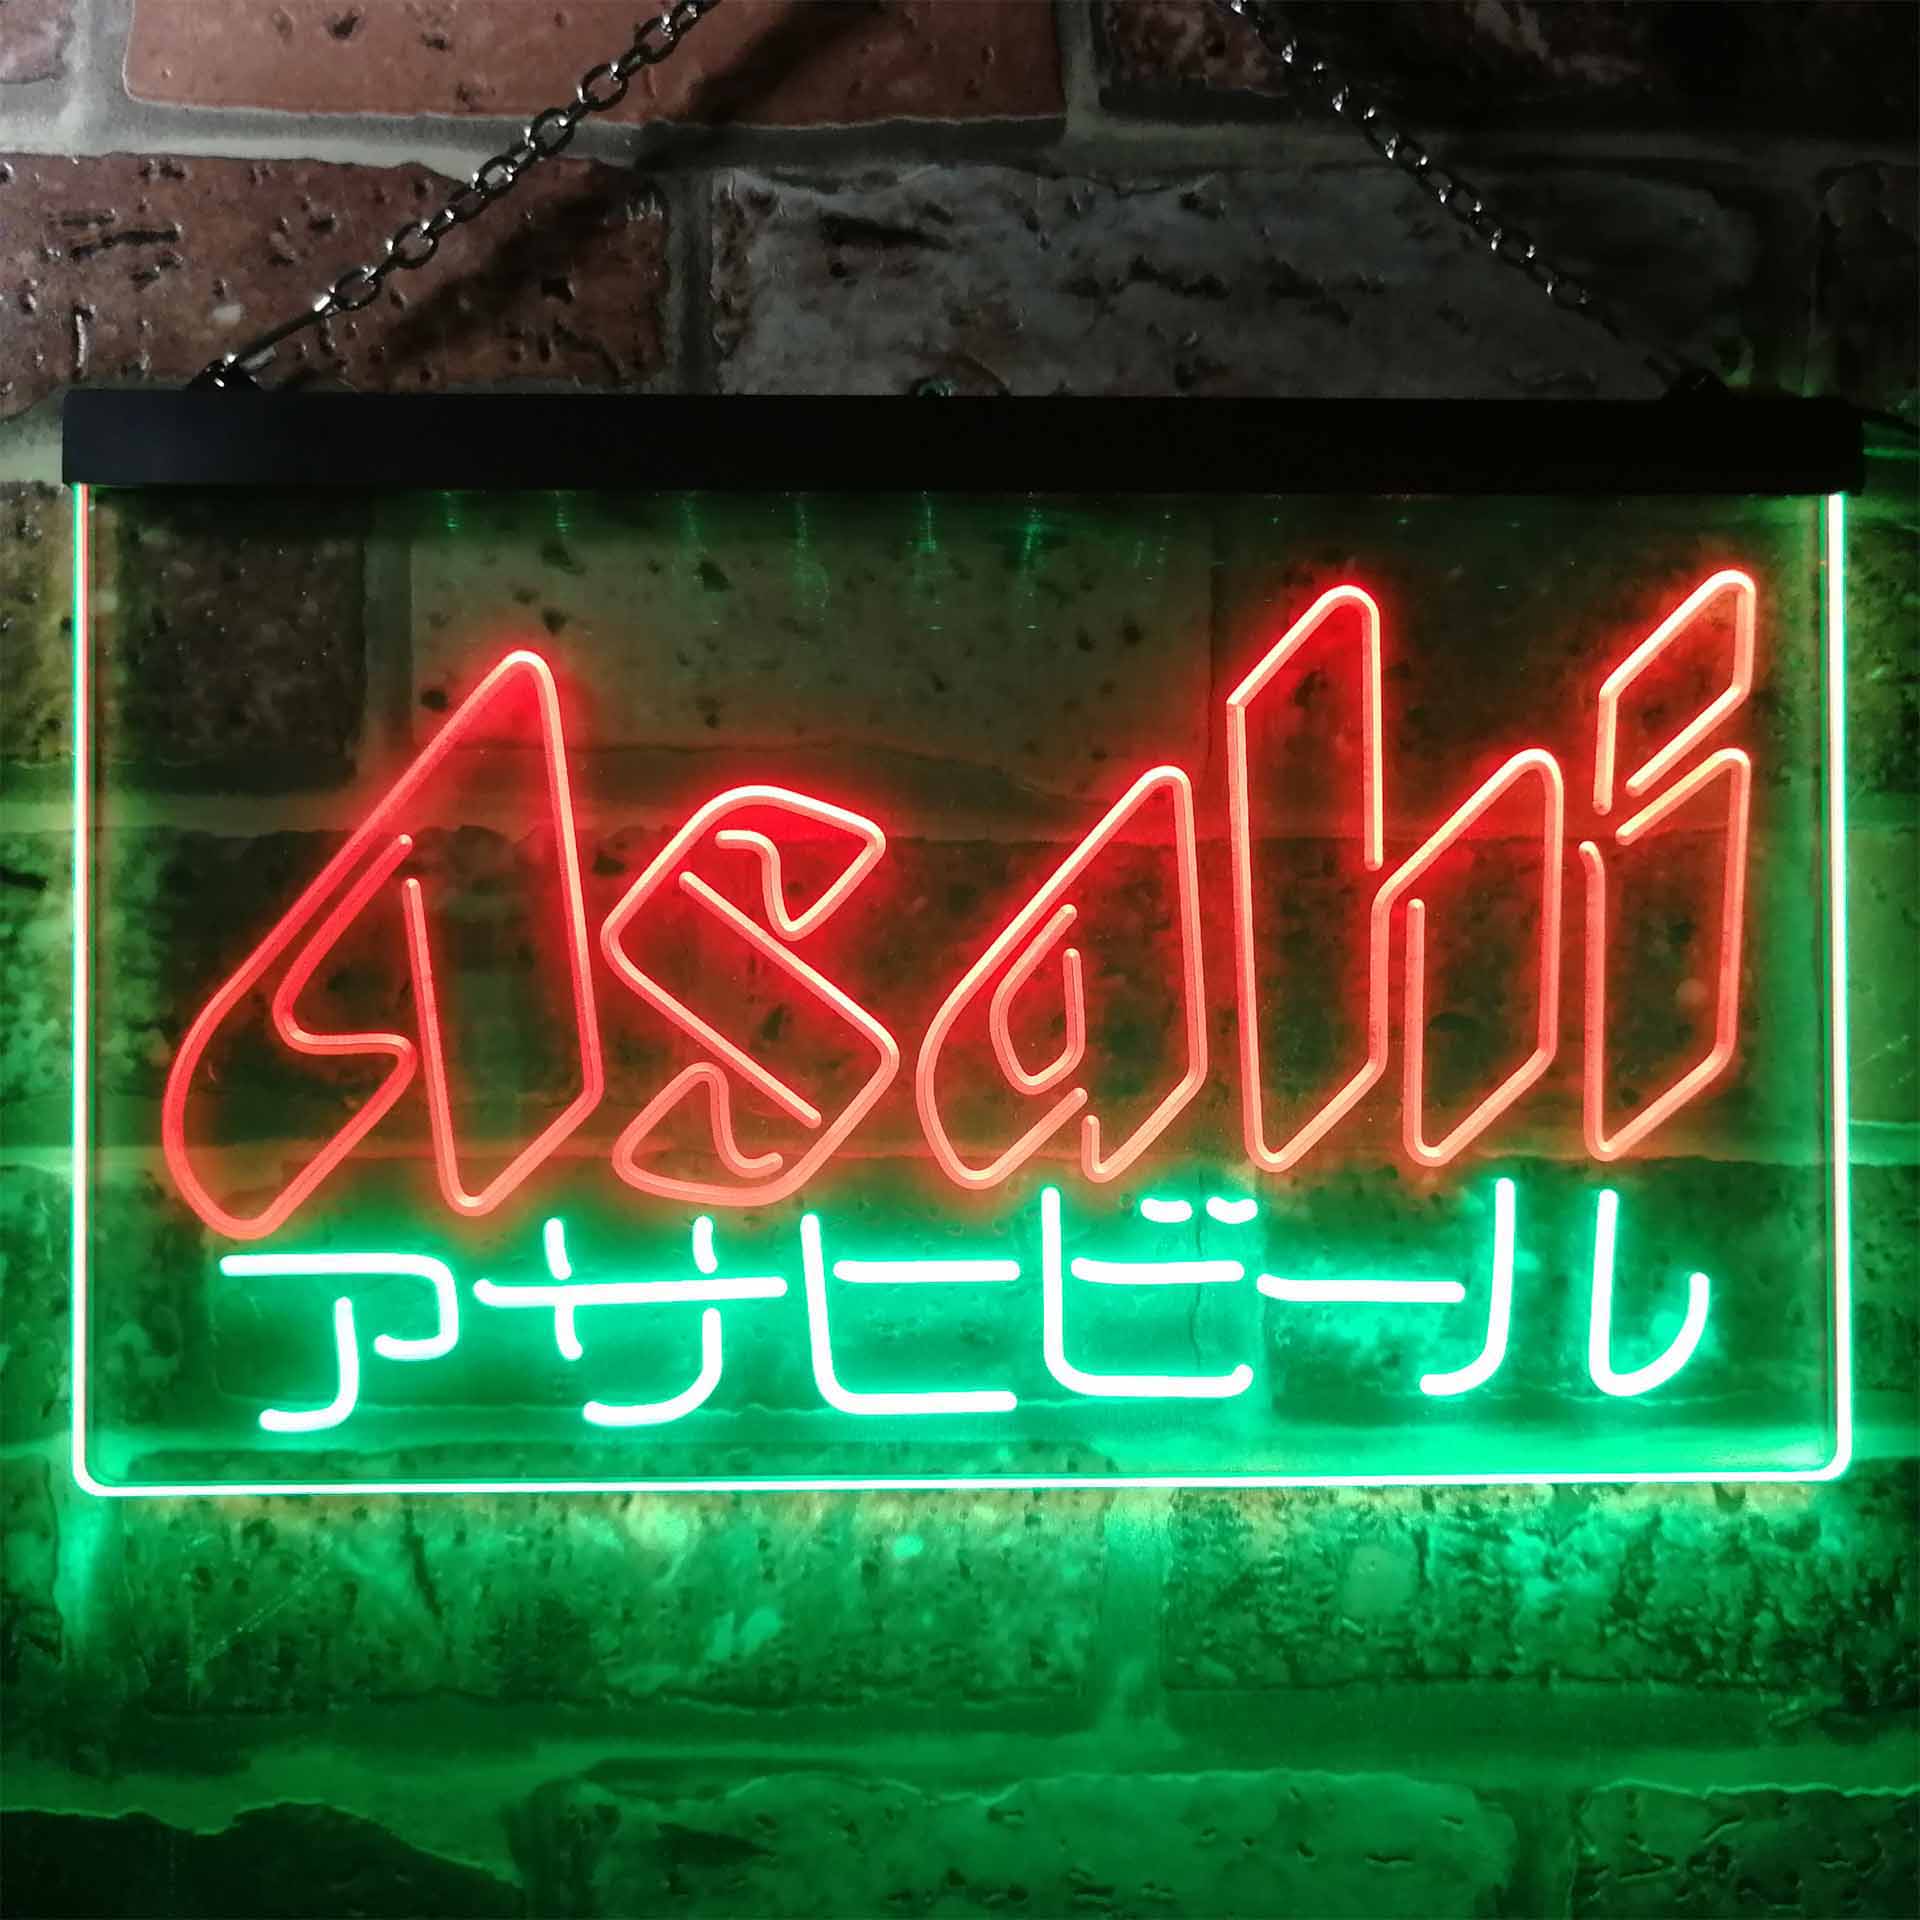 Asahi Japan Beer Bar LED Neon Sign